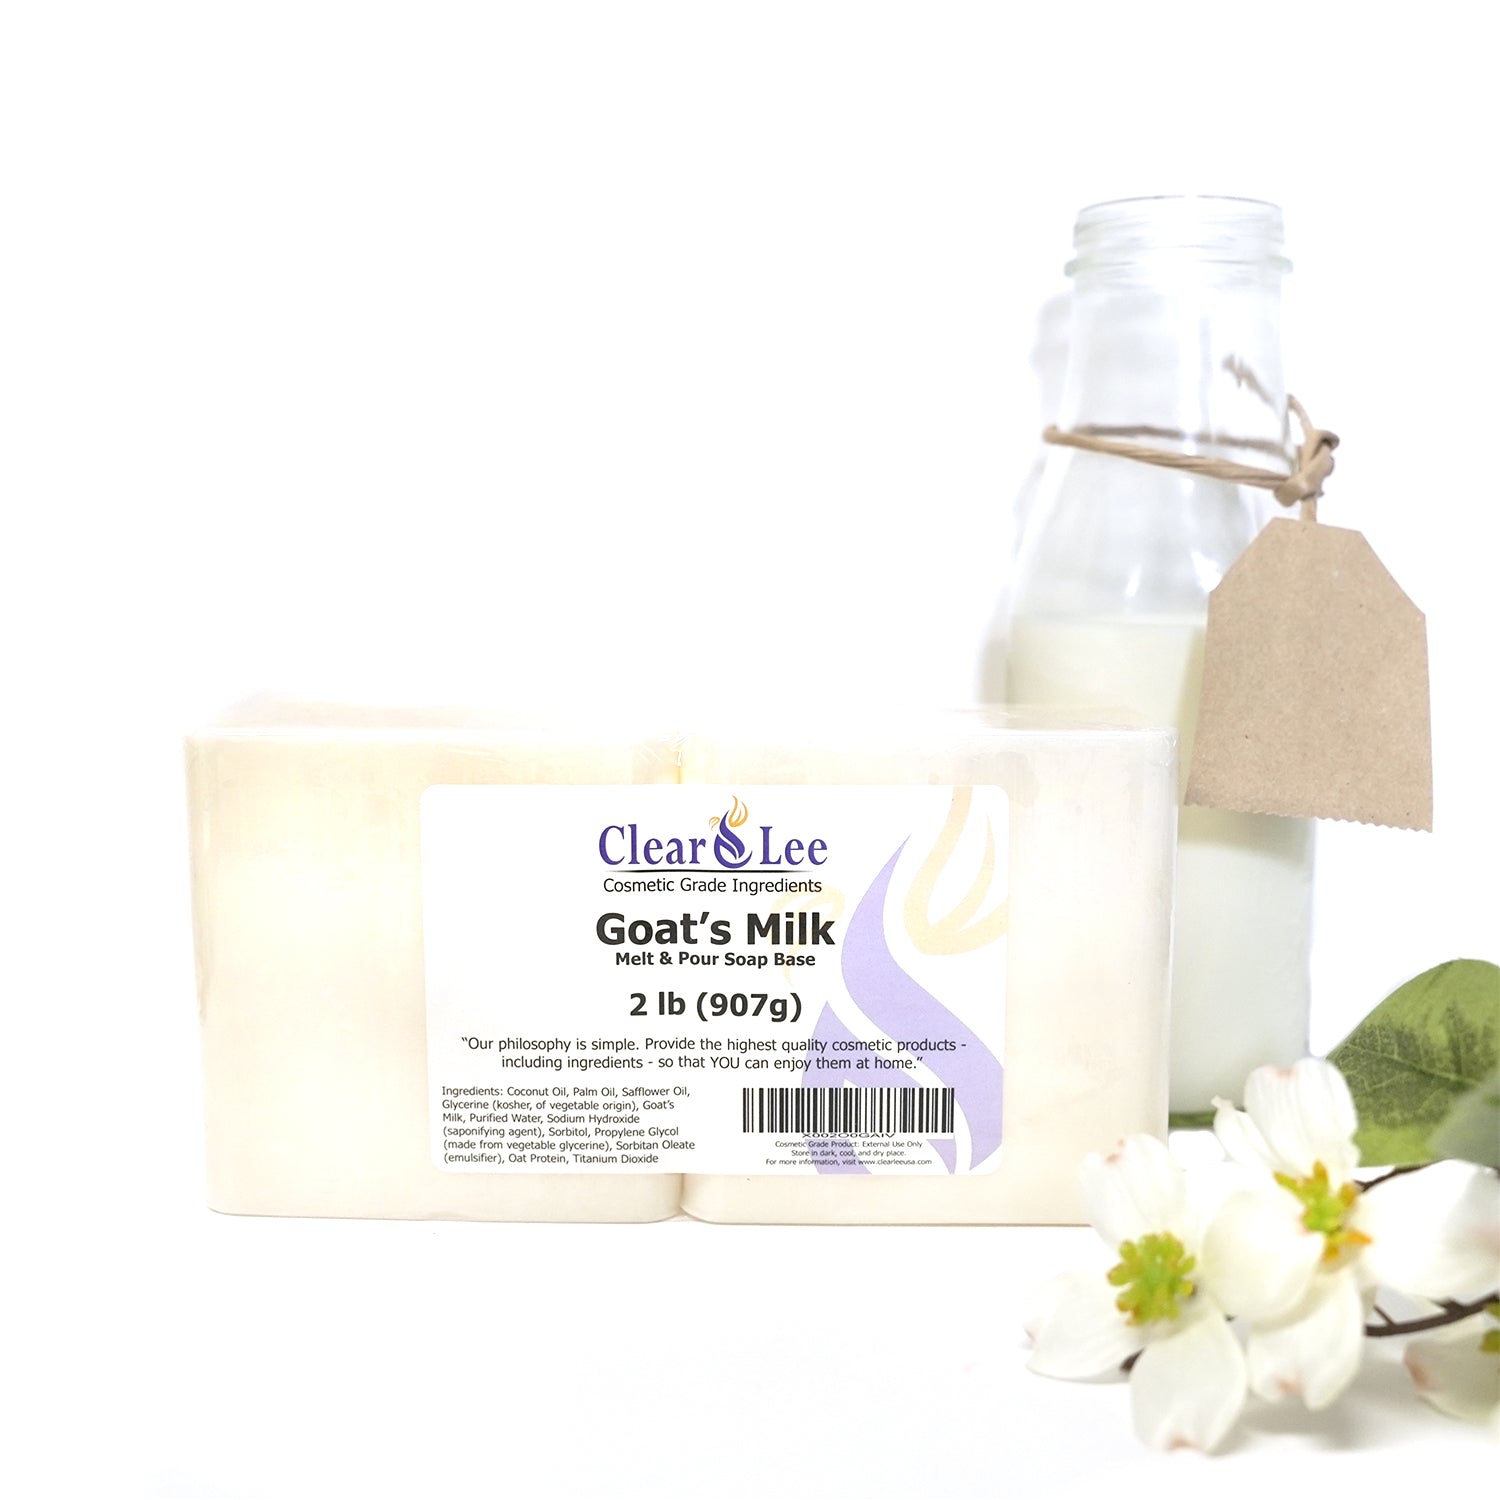 Melt and Pour Soap Base │ 1lb of Goats Milk Soap Base │ Glycerin